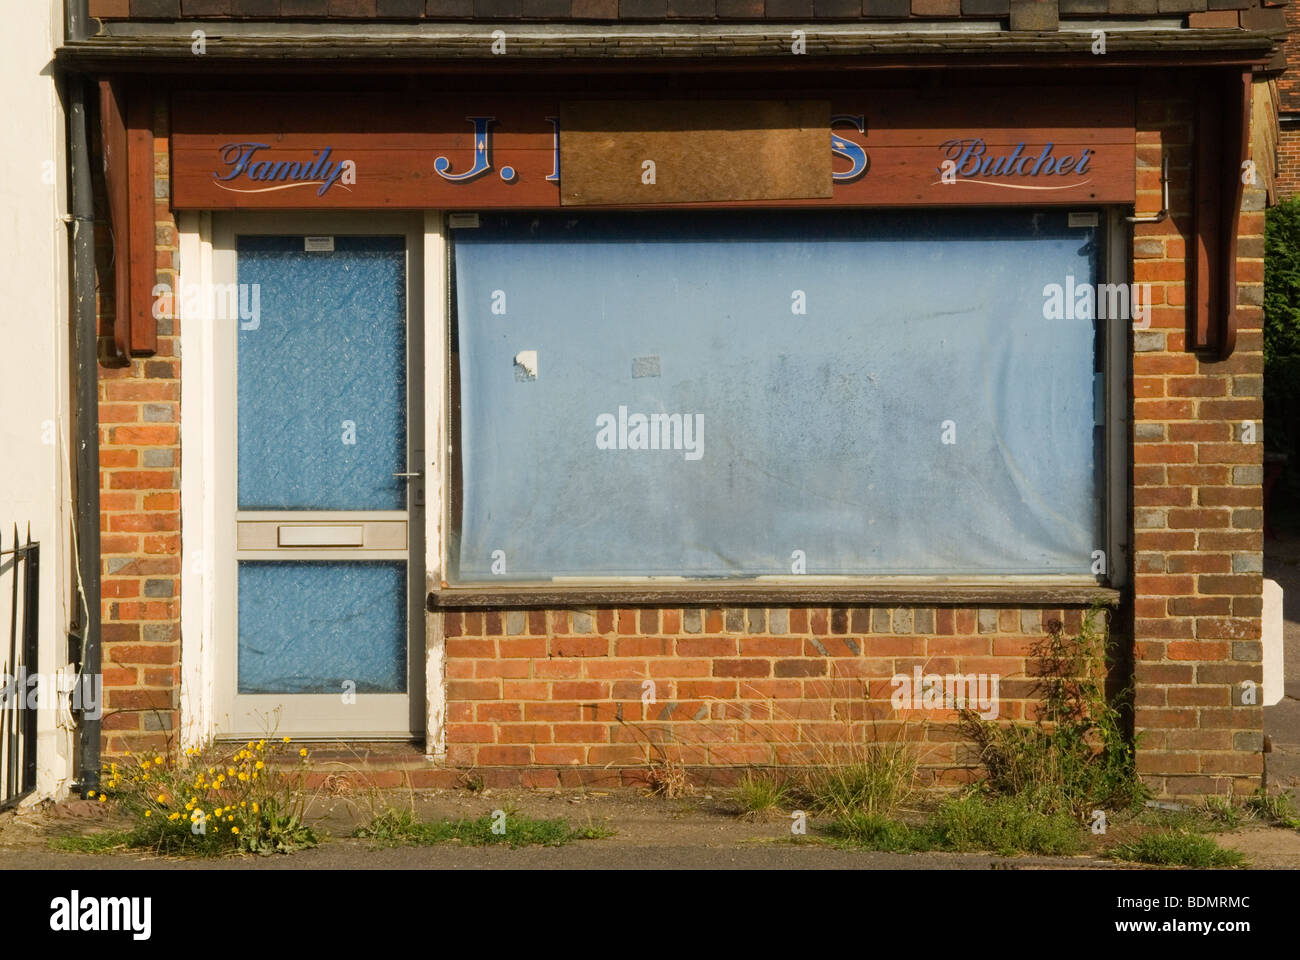 Recession 2000s UK, local shops closed down Ockley village Surrey England 2009.HOMER SYKES Stock Photo